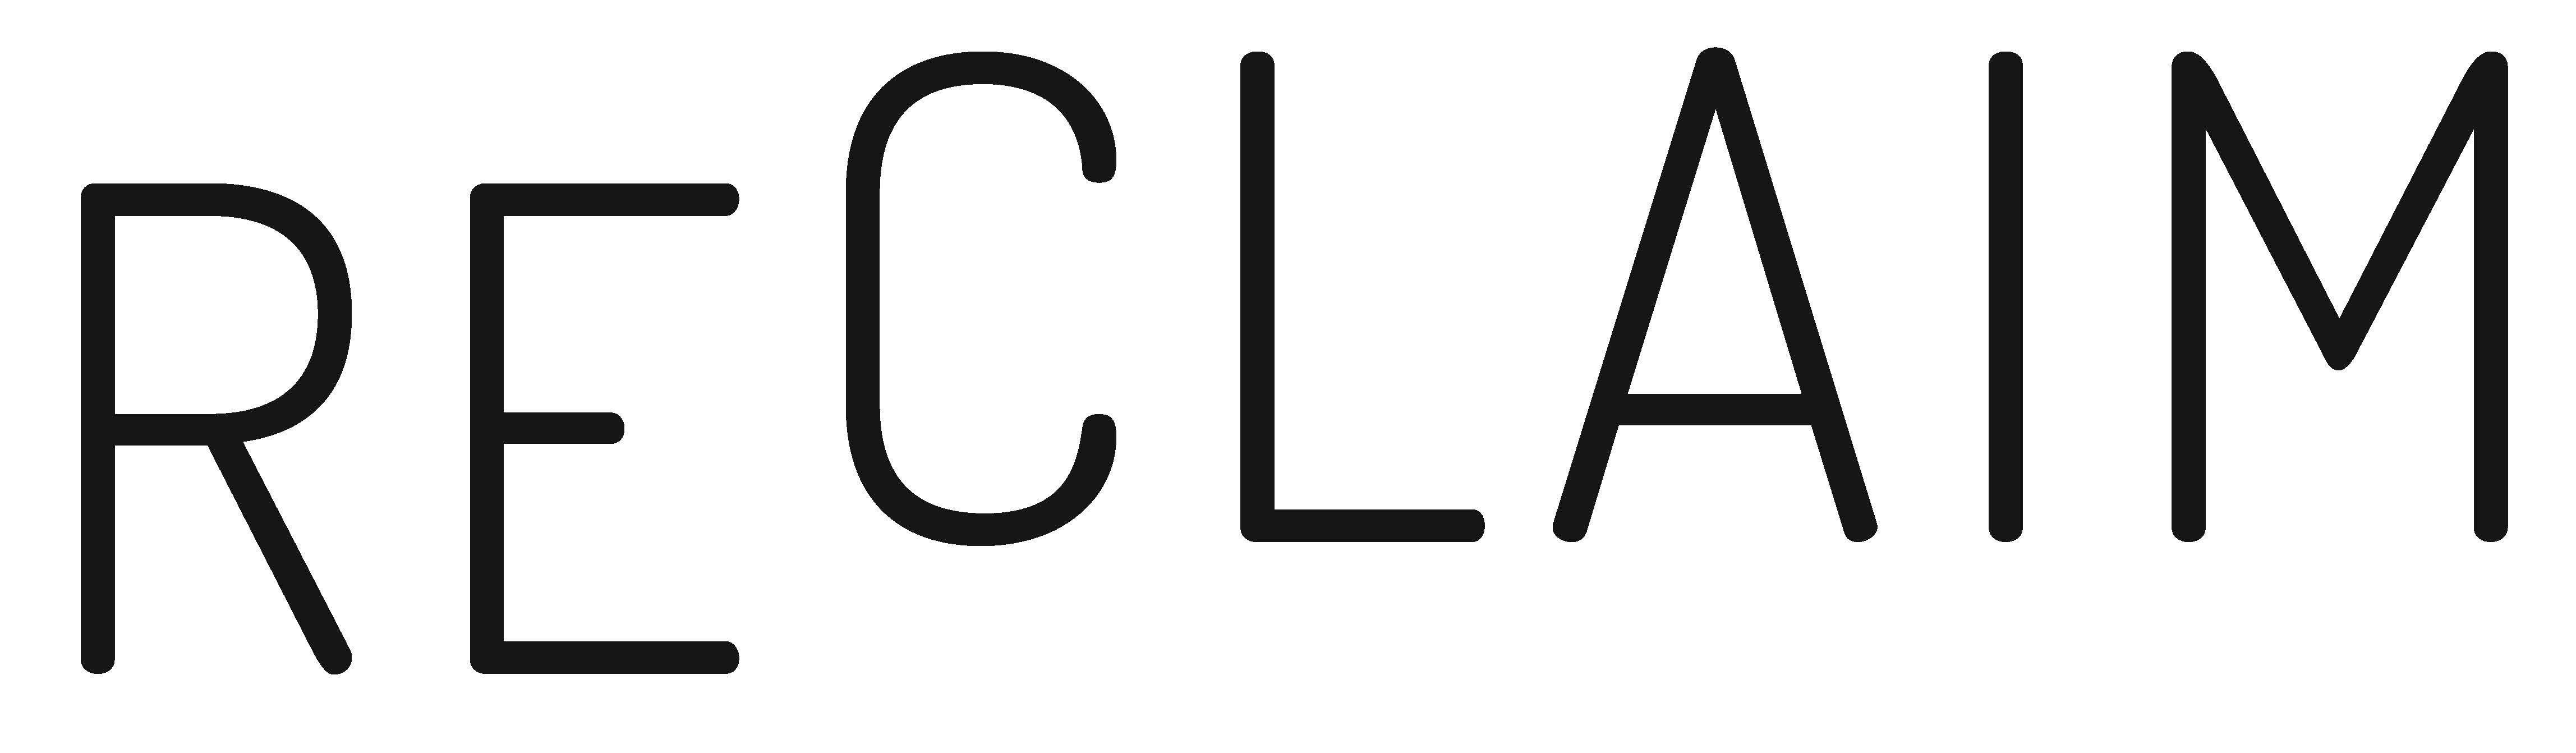 Reclaim Logo - Reclaim Community Church